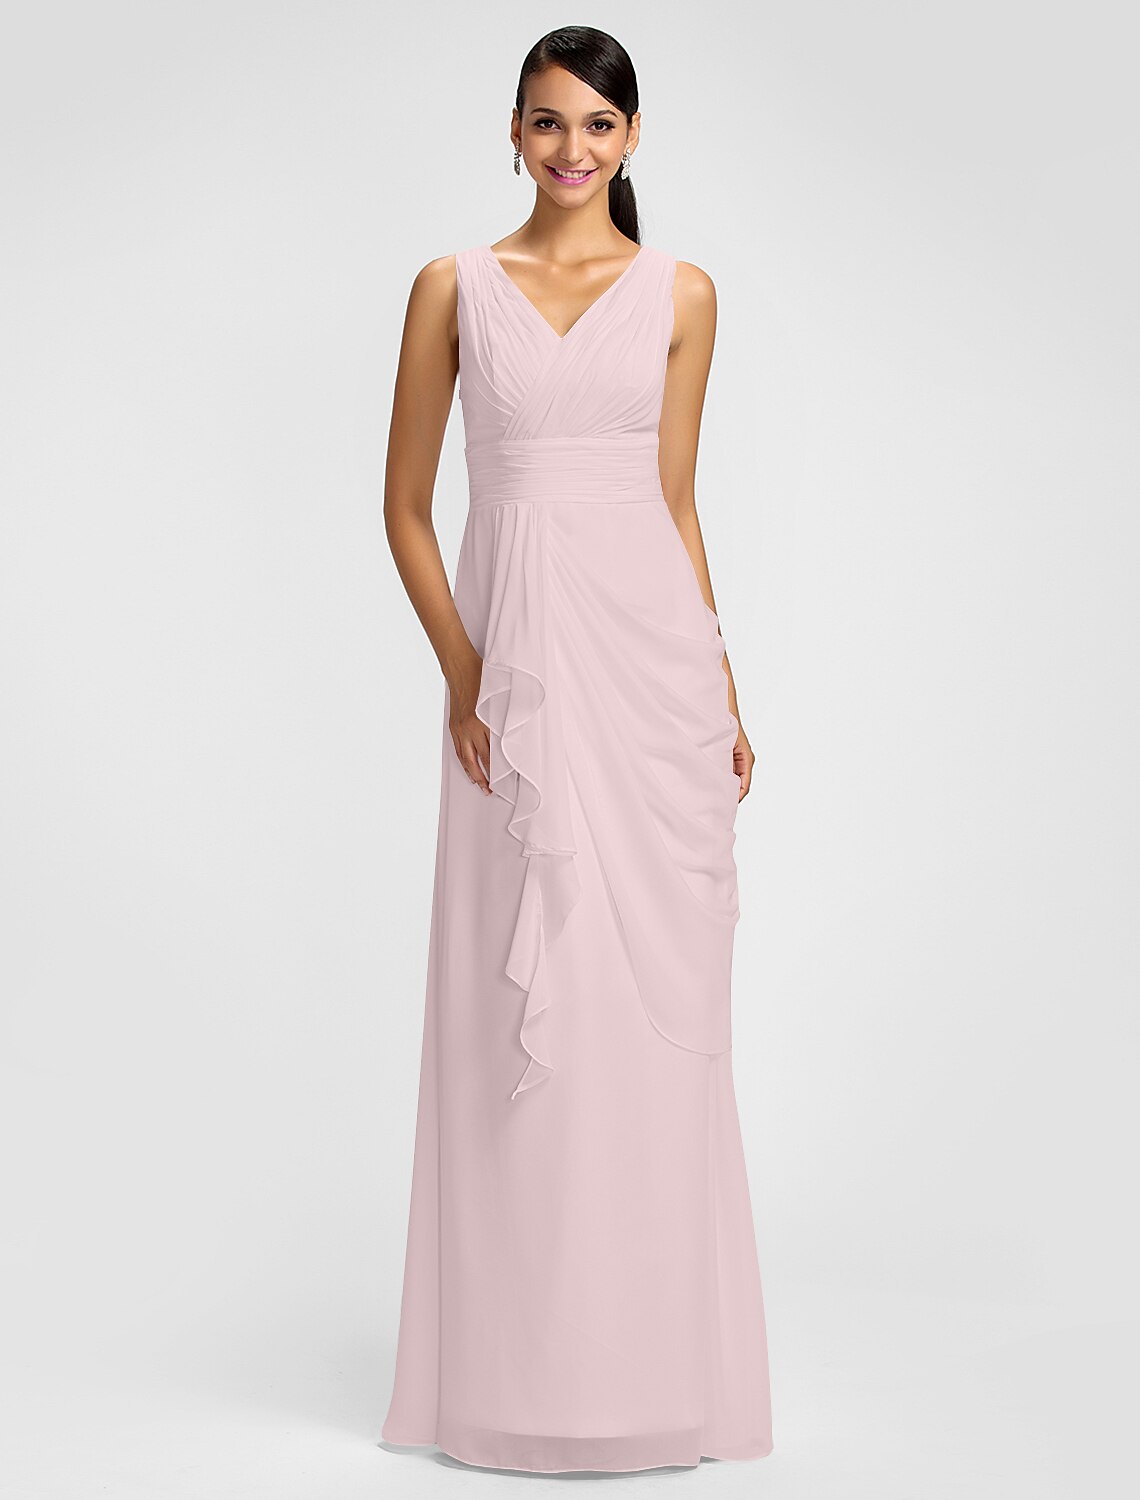 Sheath / Column V Neck Floor Length Chiffon Bridesmaid Dress with Draping / Sash / Ribbon